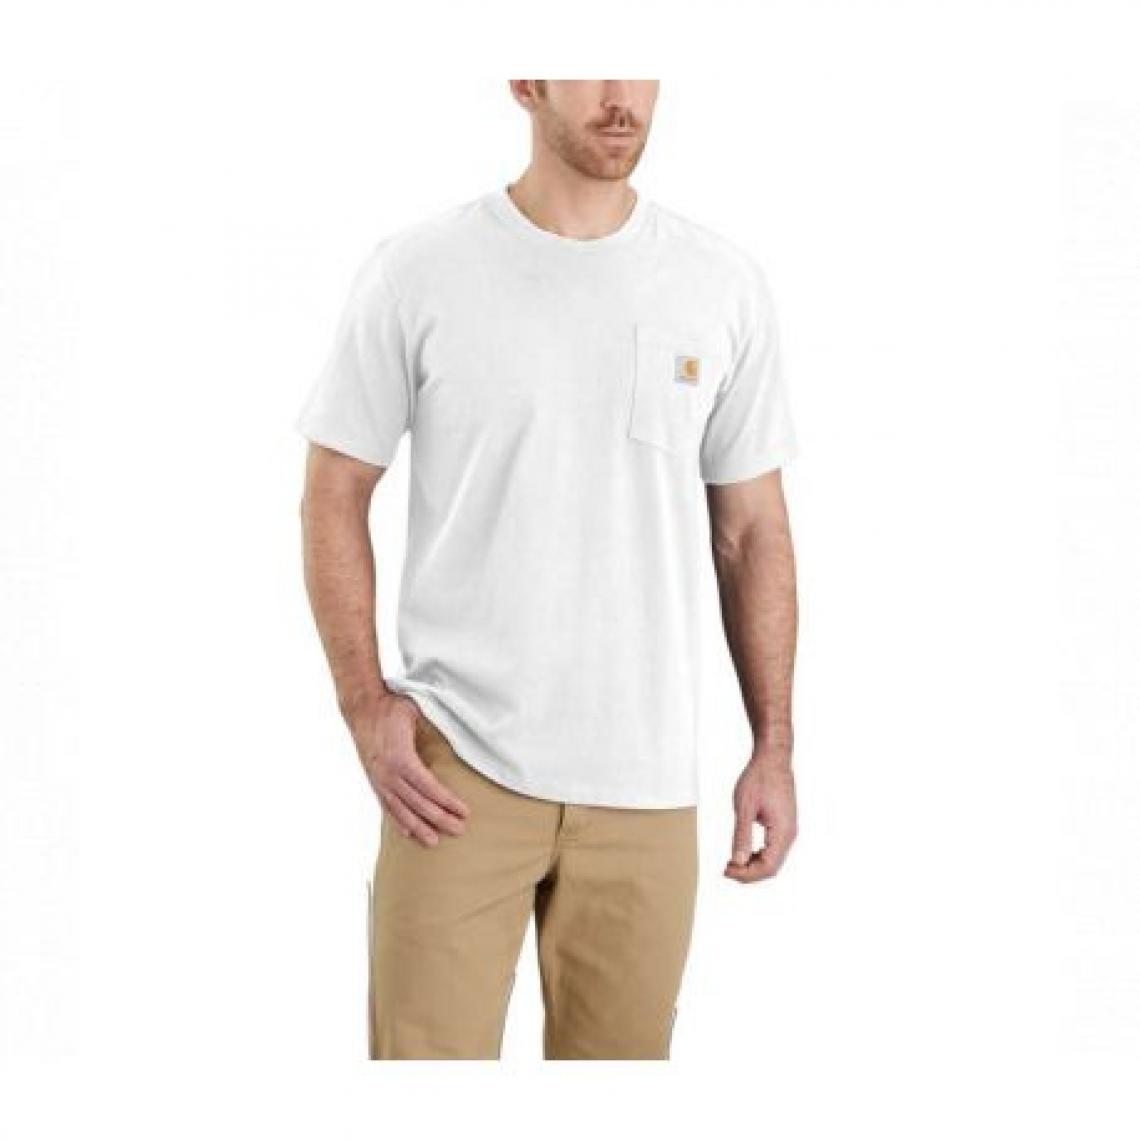 Carhartt - Tee-shirt CARHARTT Poche poitrine - Taille L - Blanc - 103296 - Protections corps